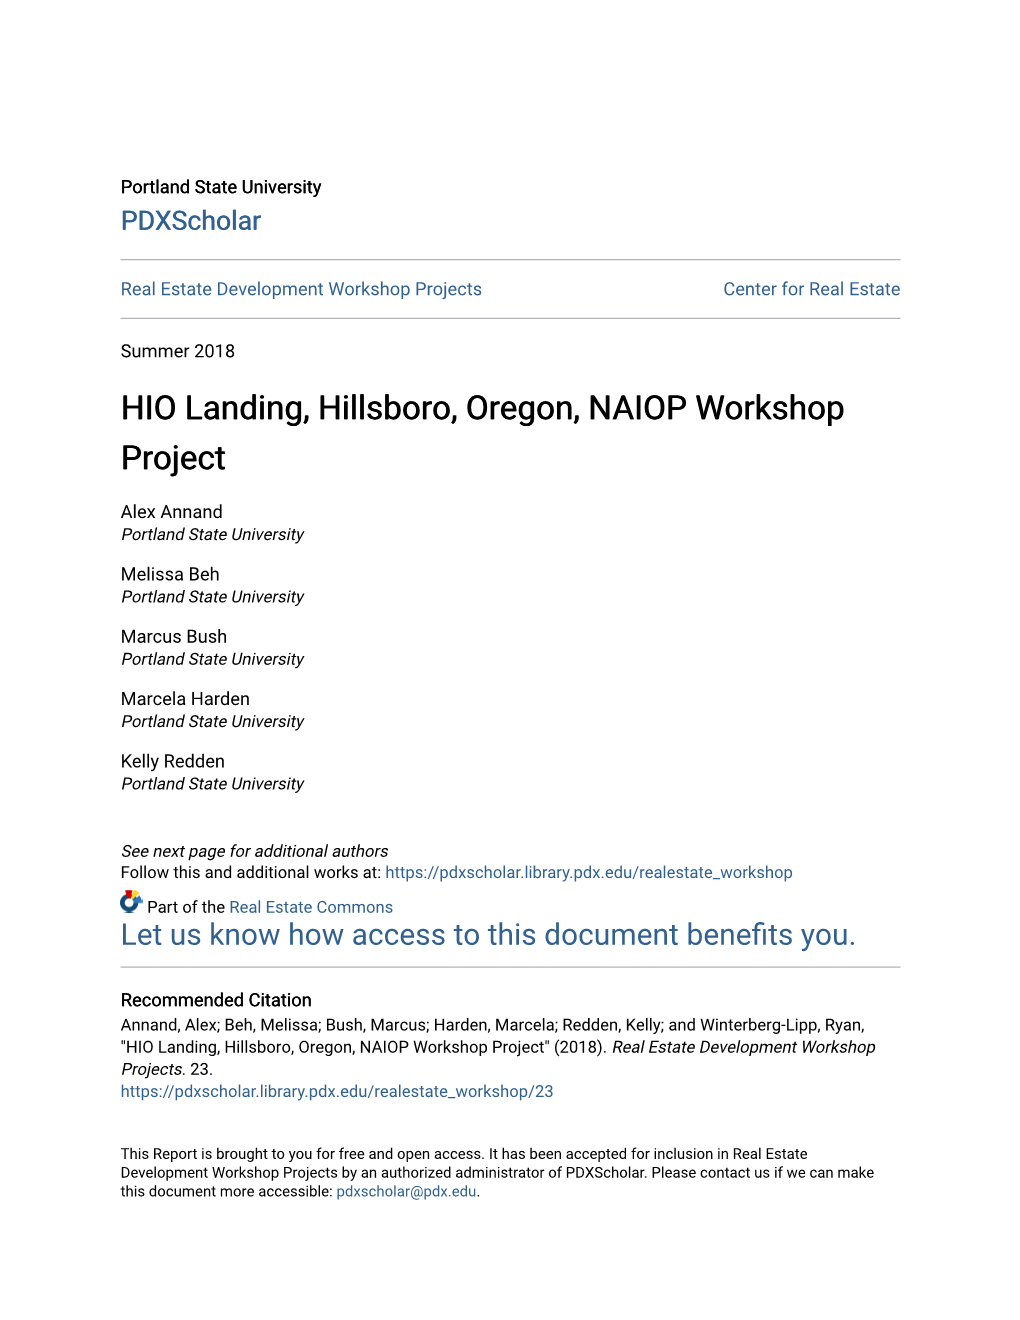 HIO Landing, Hillsboro, Oregon, NAIOP Workshop Project